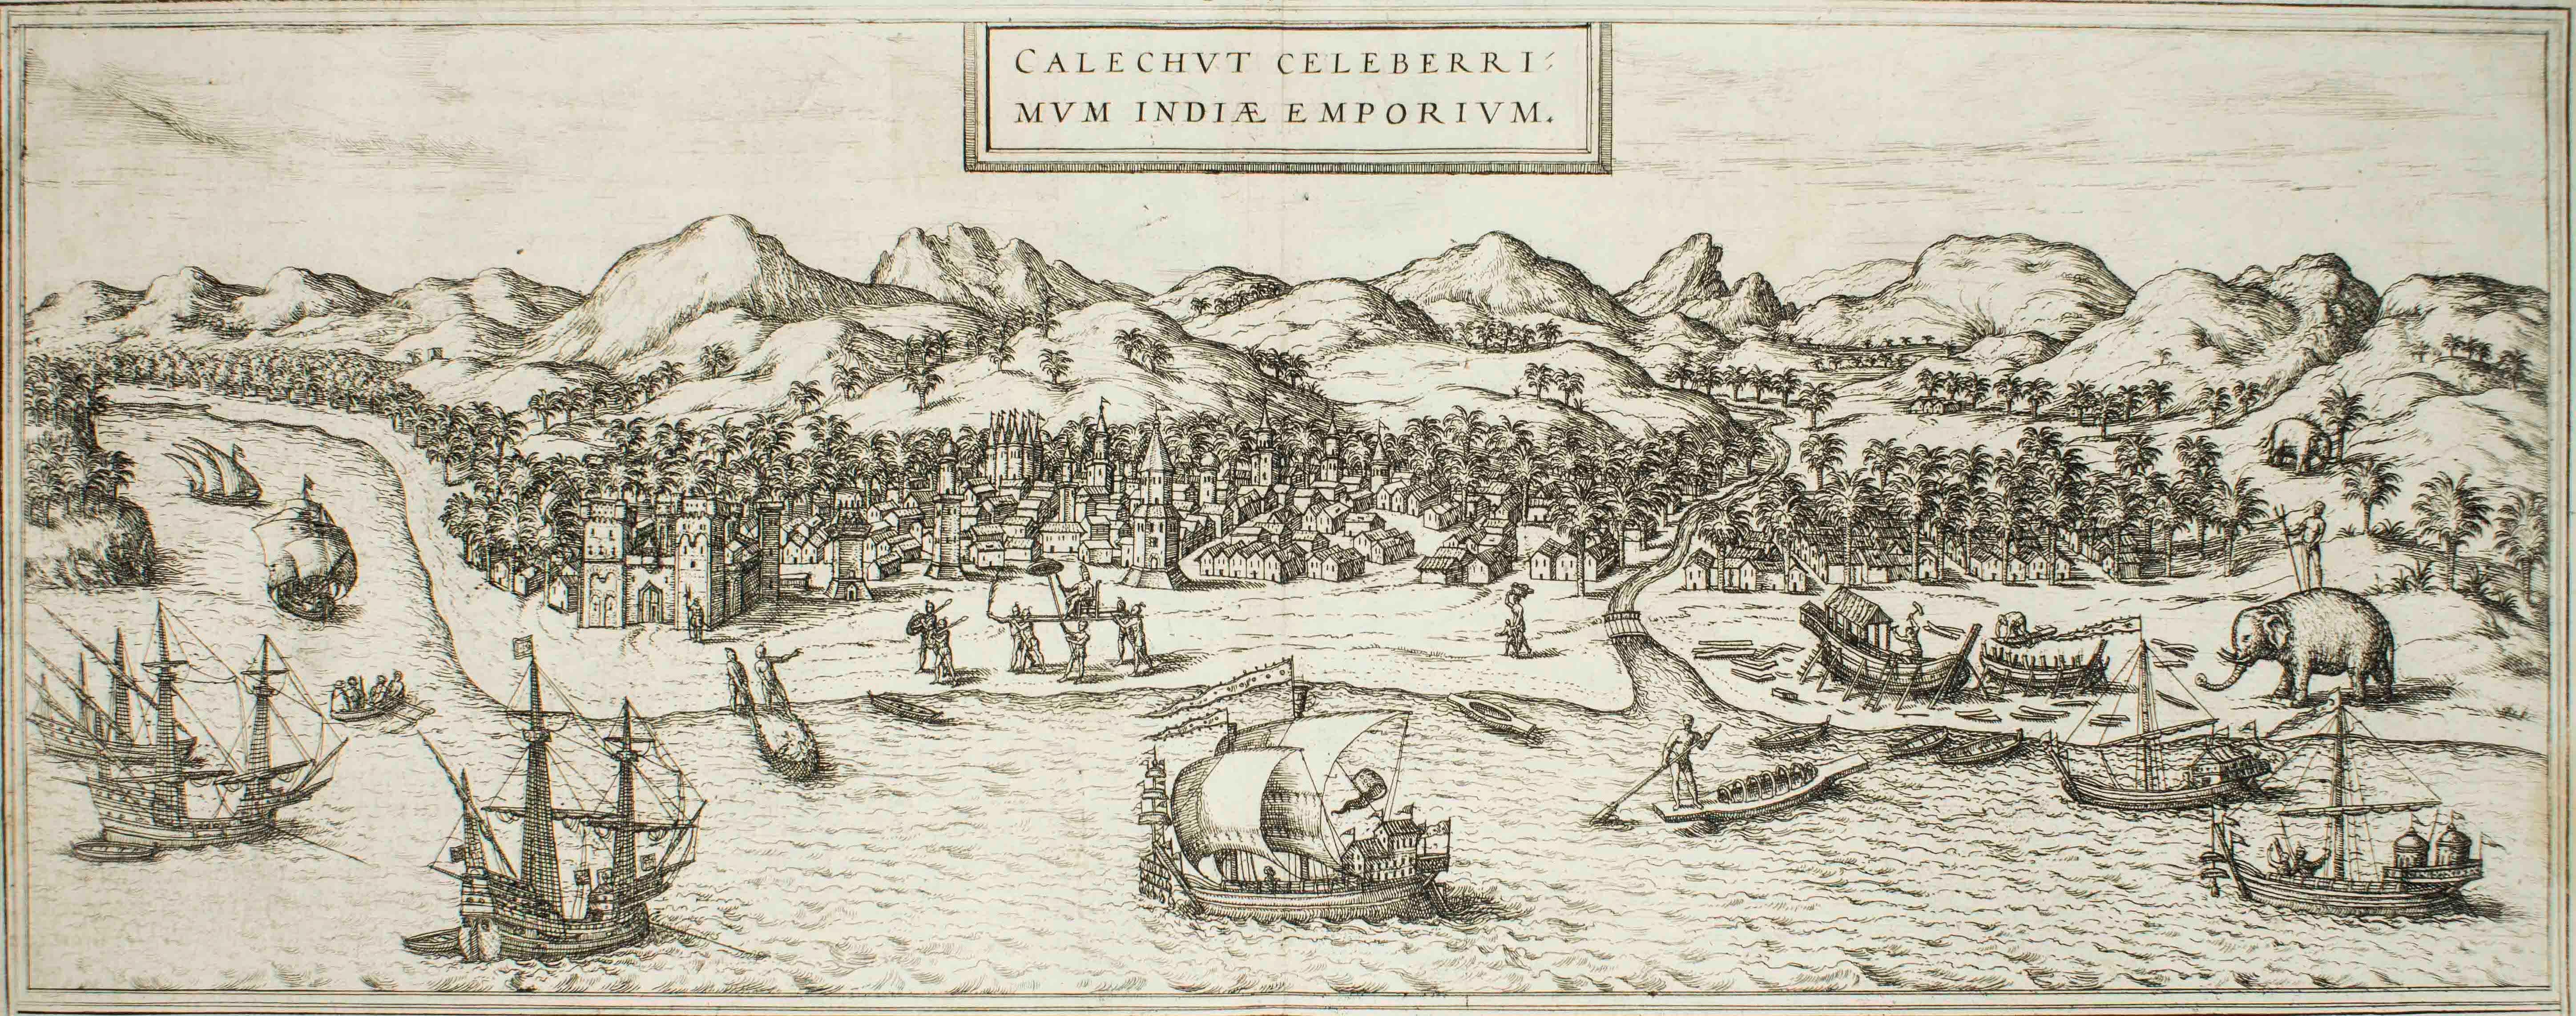 Kolkata (Calecut), Map from "Civitates Orbis Terrarum" - by F. Hogenberg - 1575